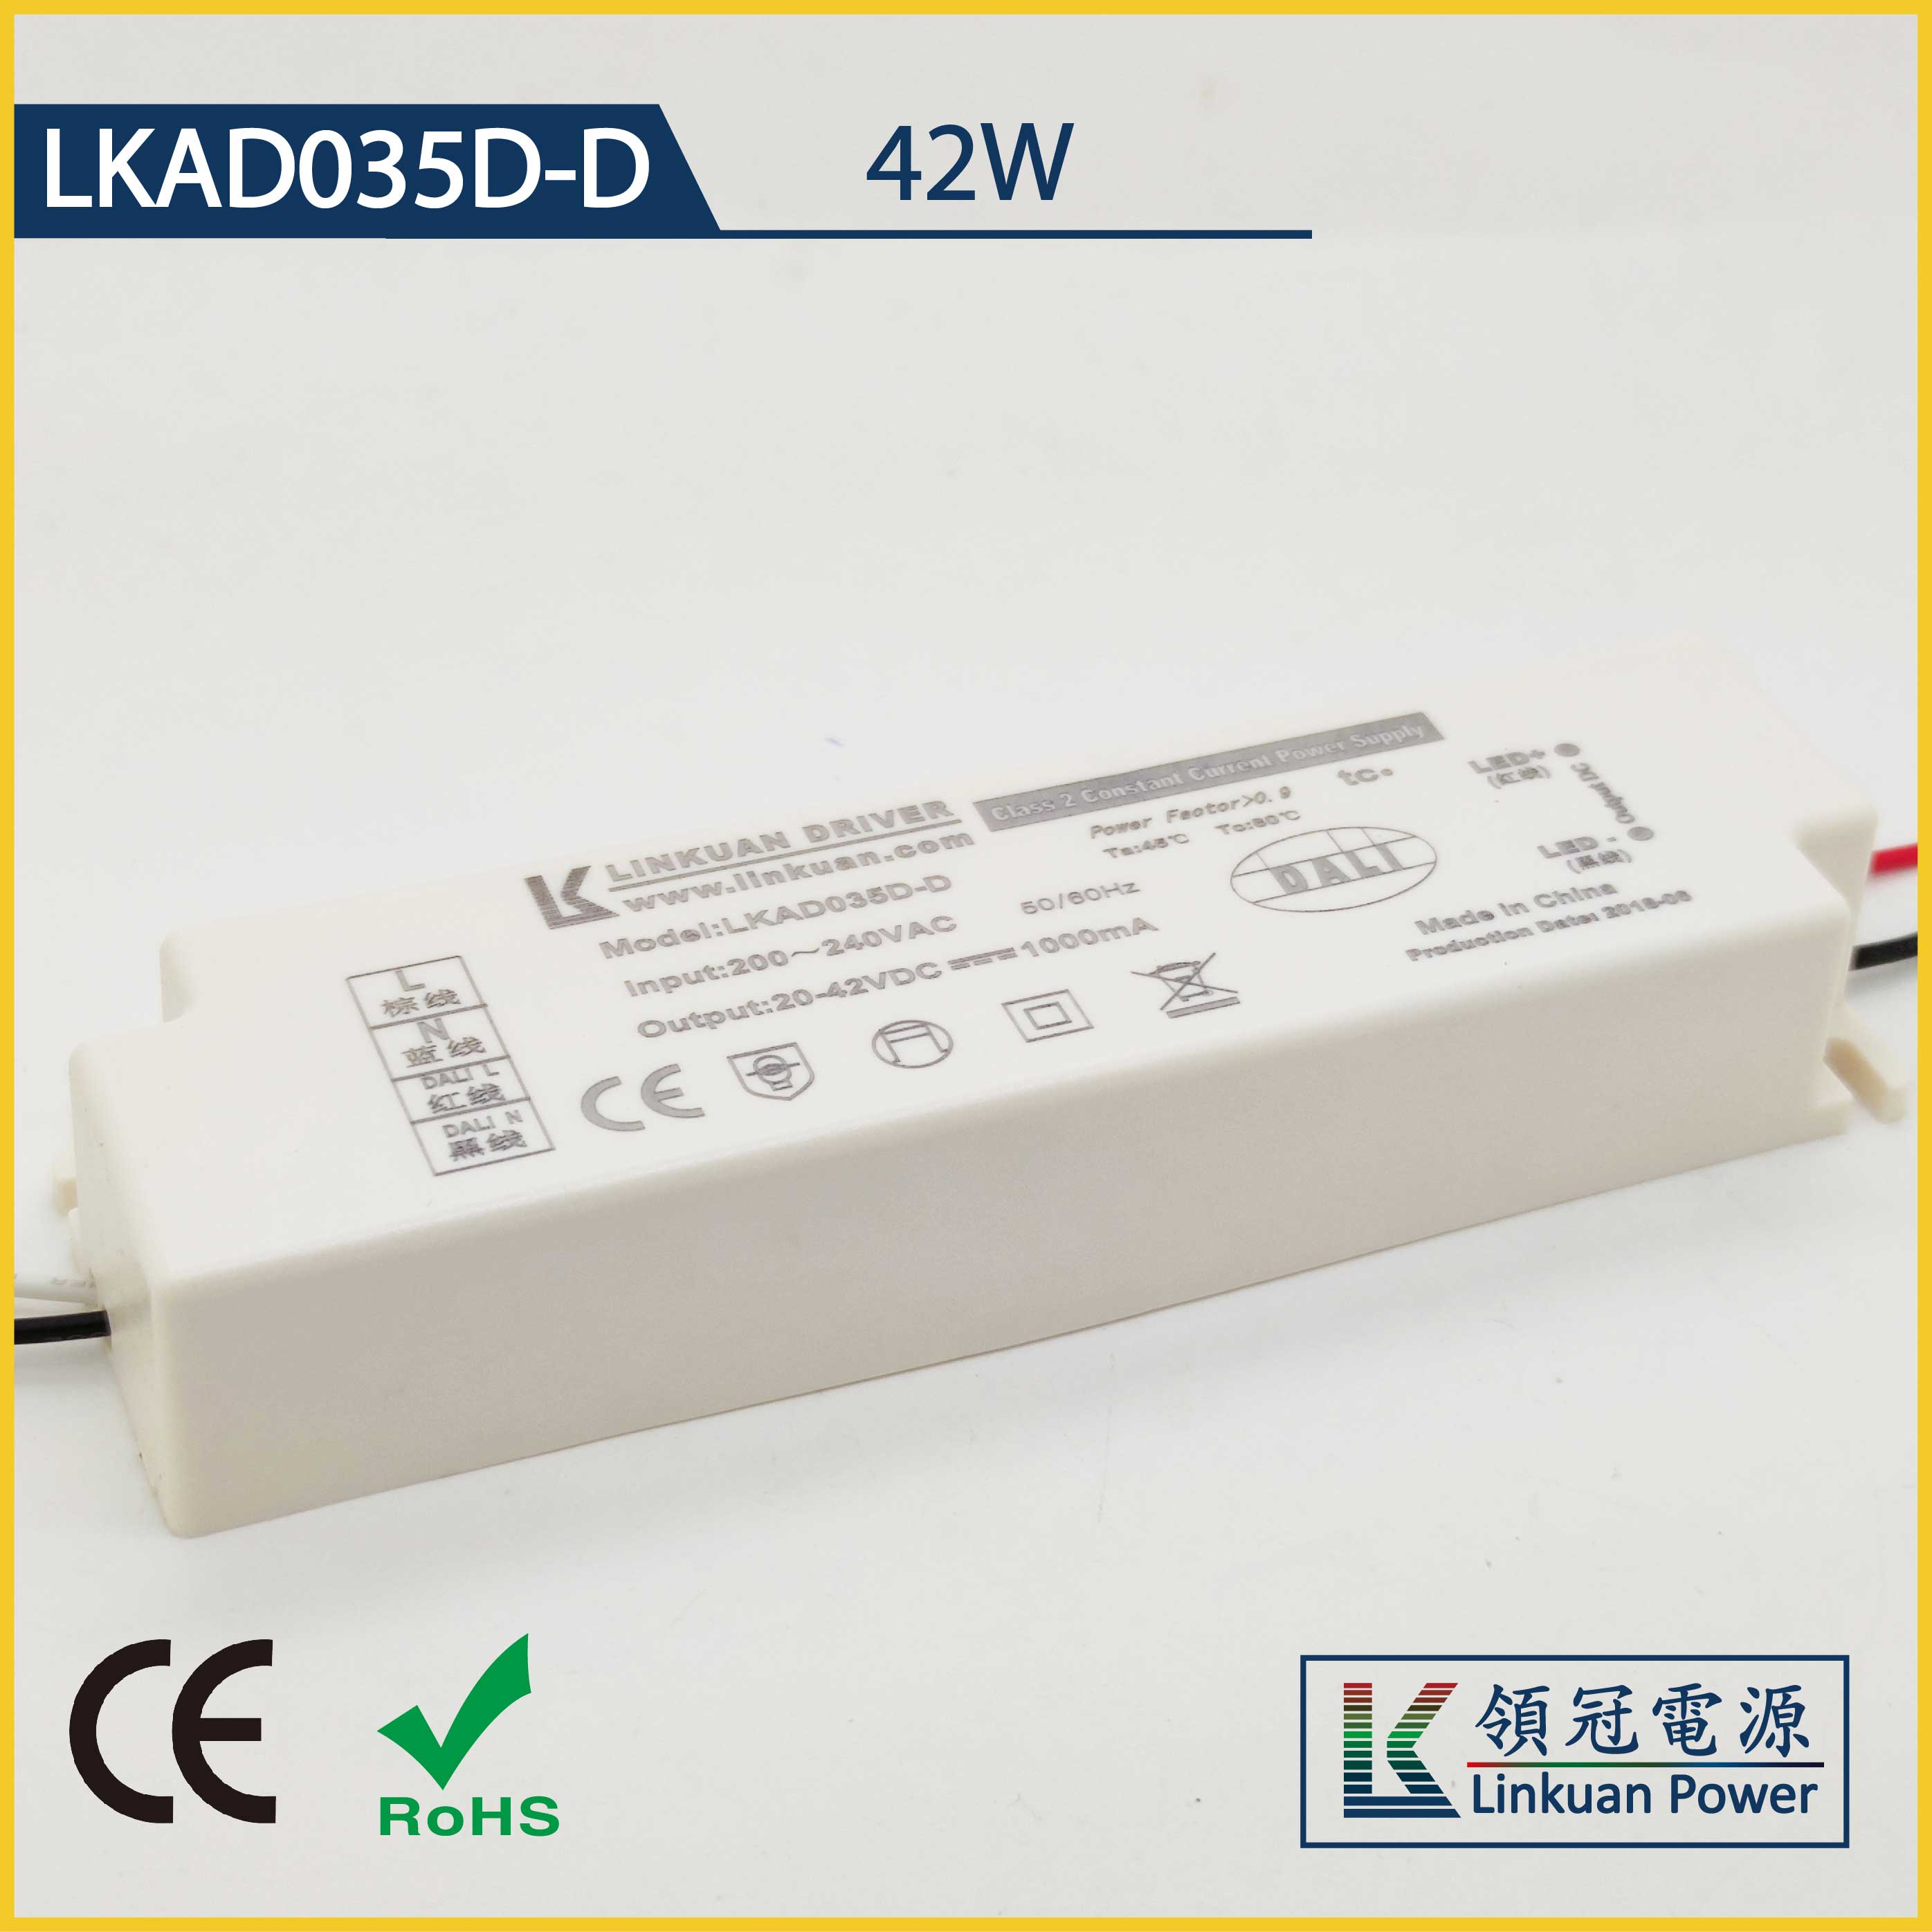 LKAD035D-D 42W 10-42V 1000mA DALI Dimming LED drivers